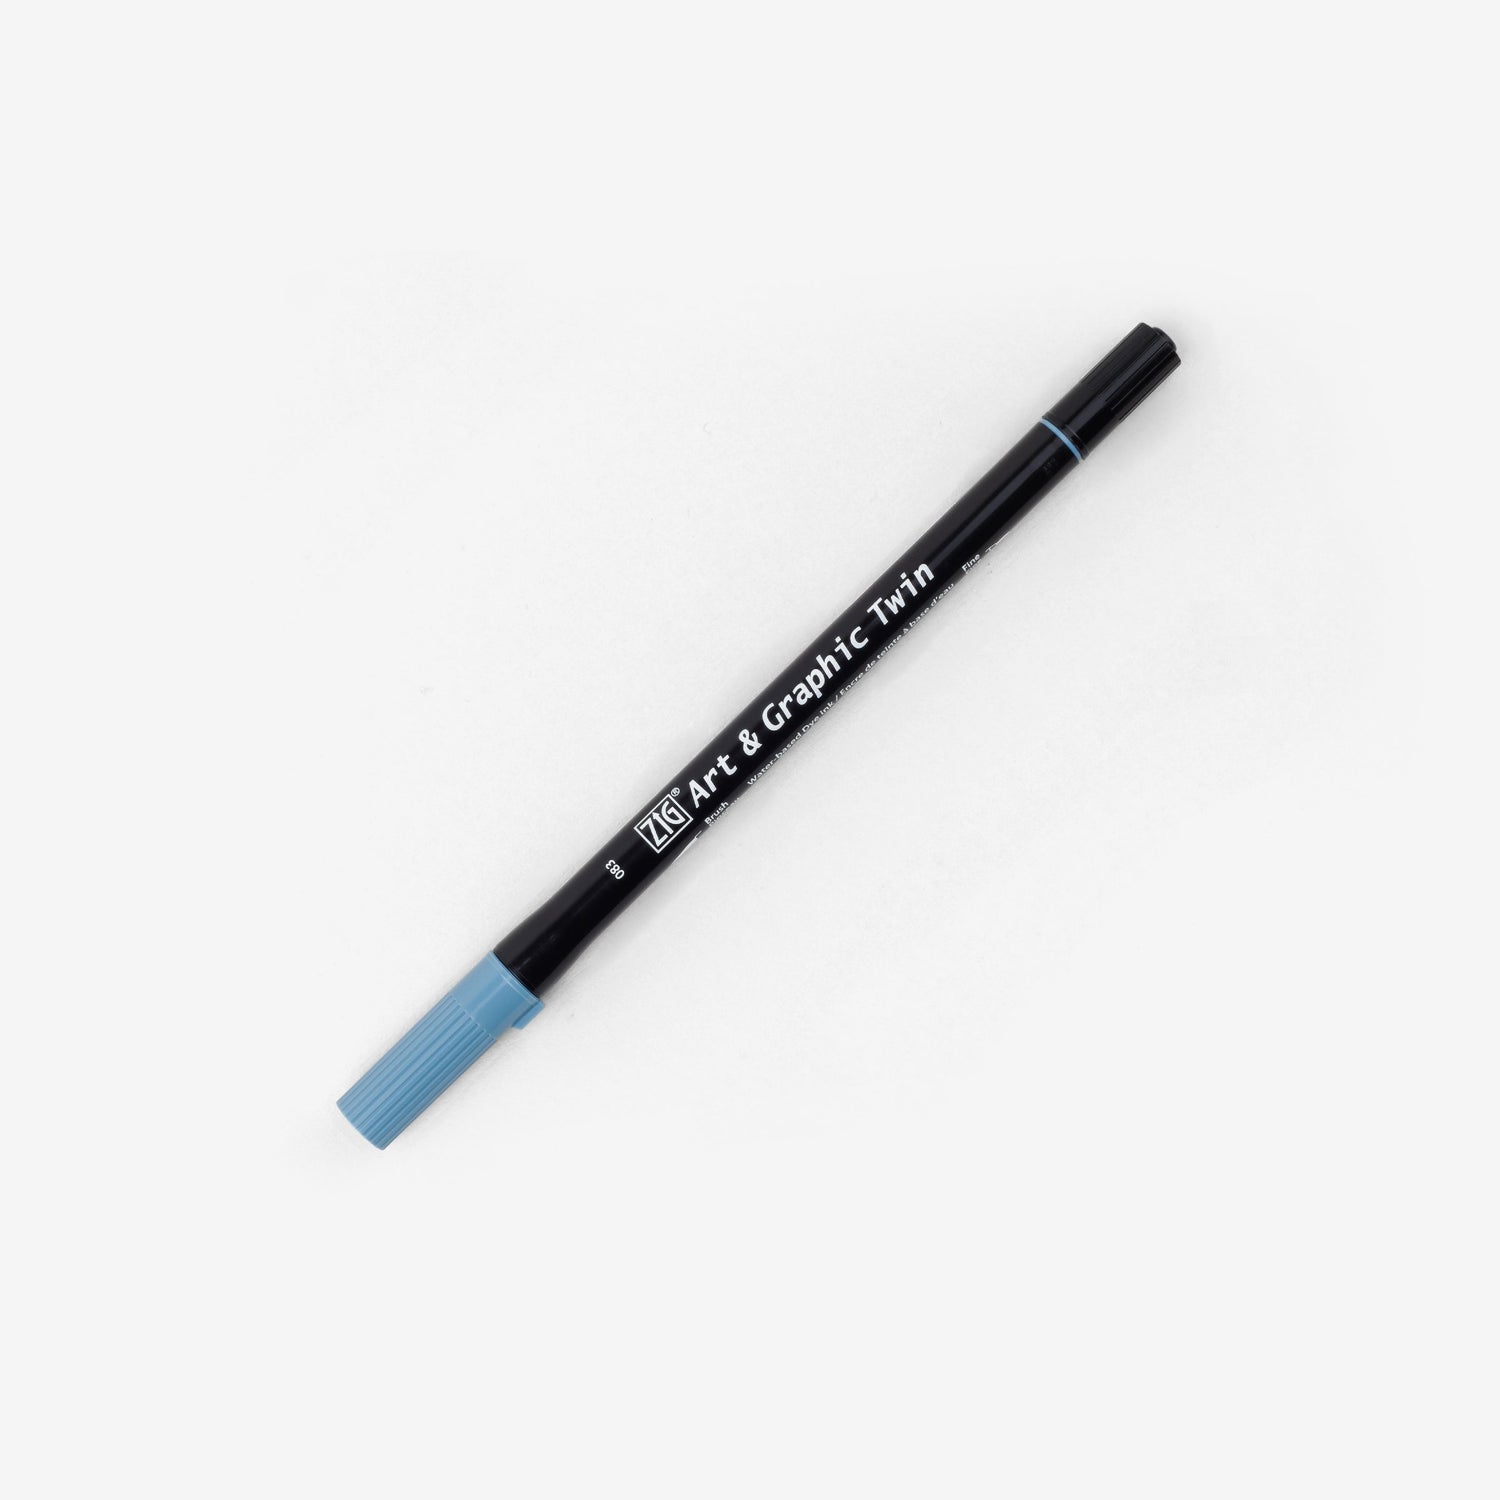 Kuretake Art & Graphic Twin Pen - Blue Gray